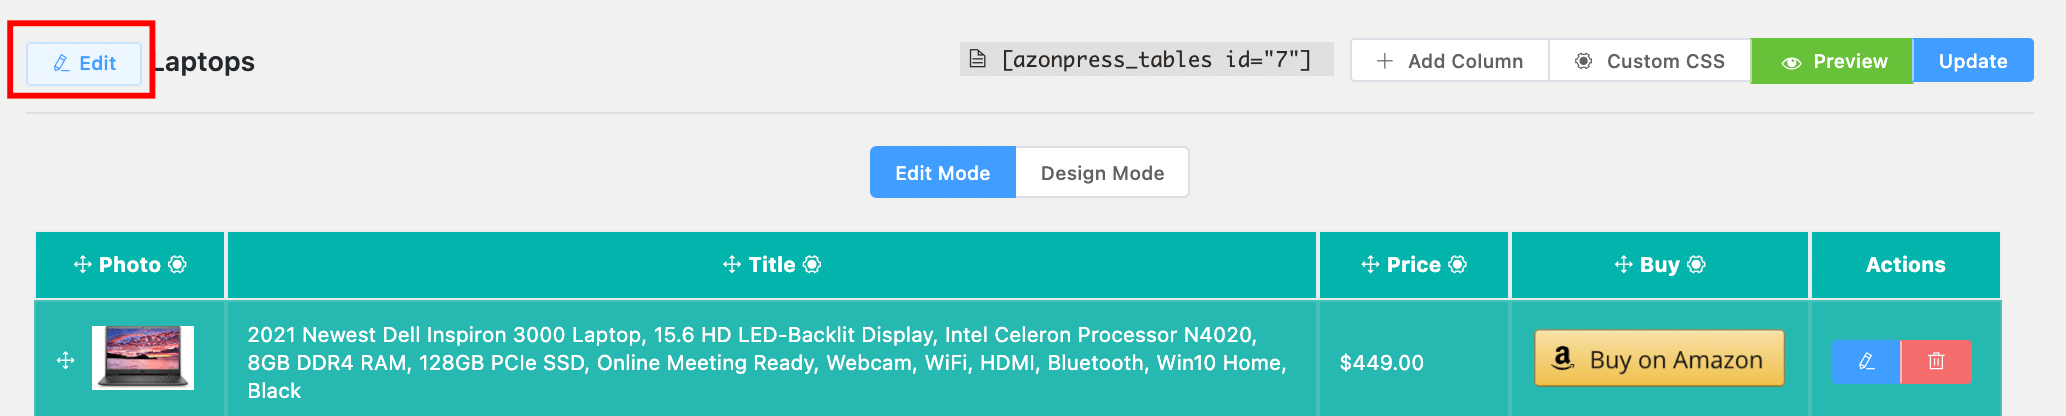 Edit Table Title - Azonpress